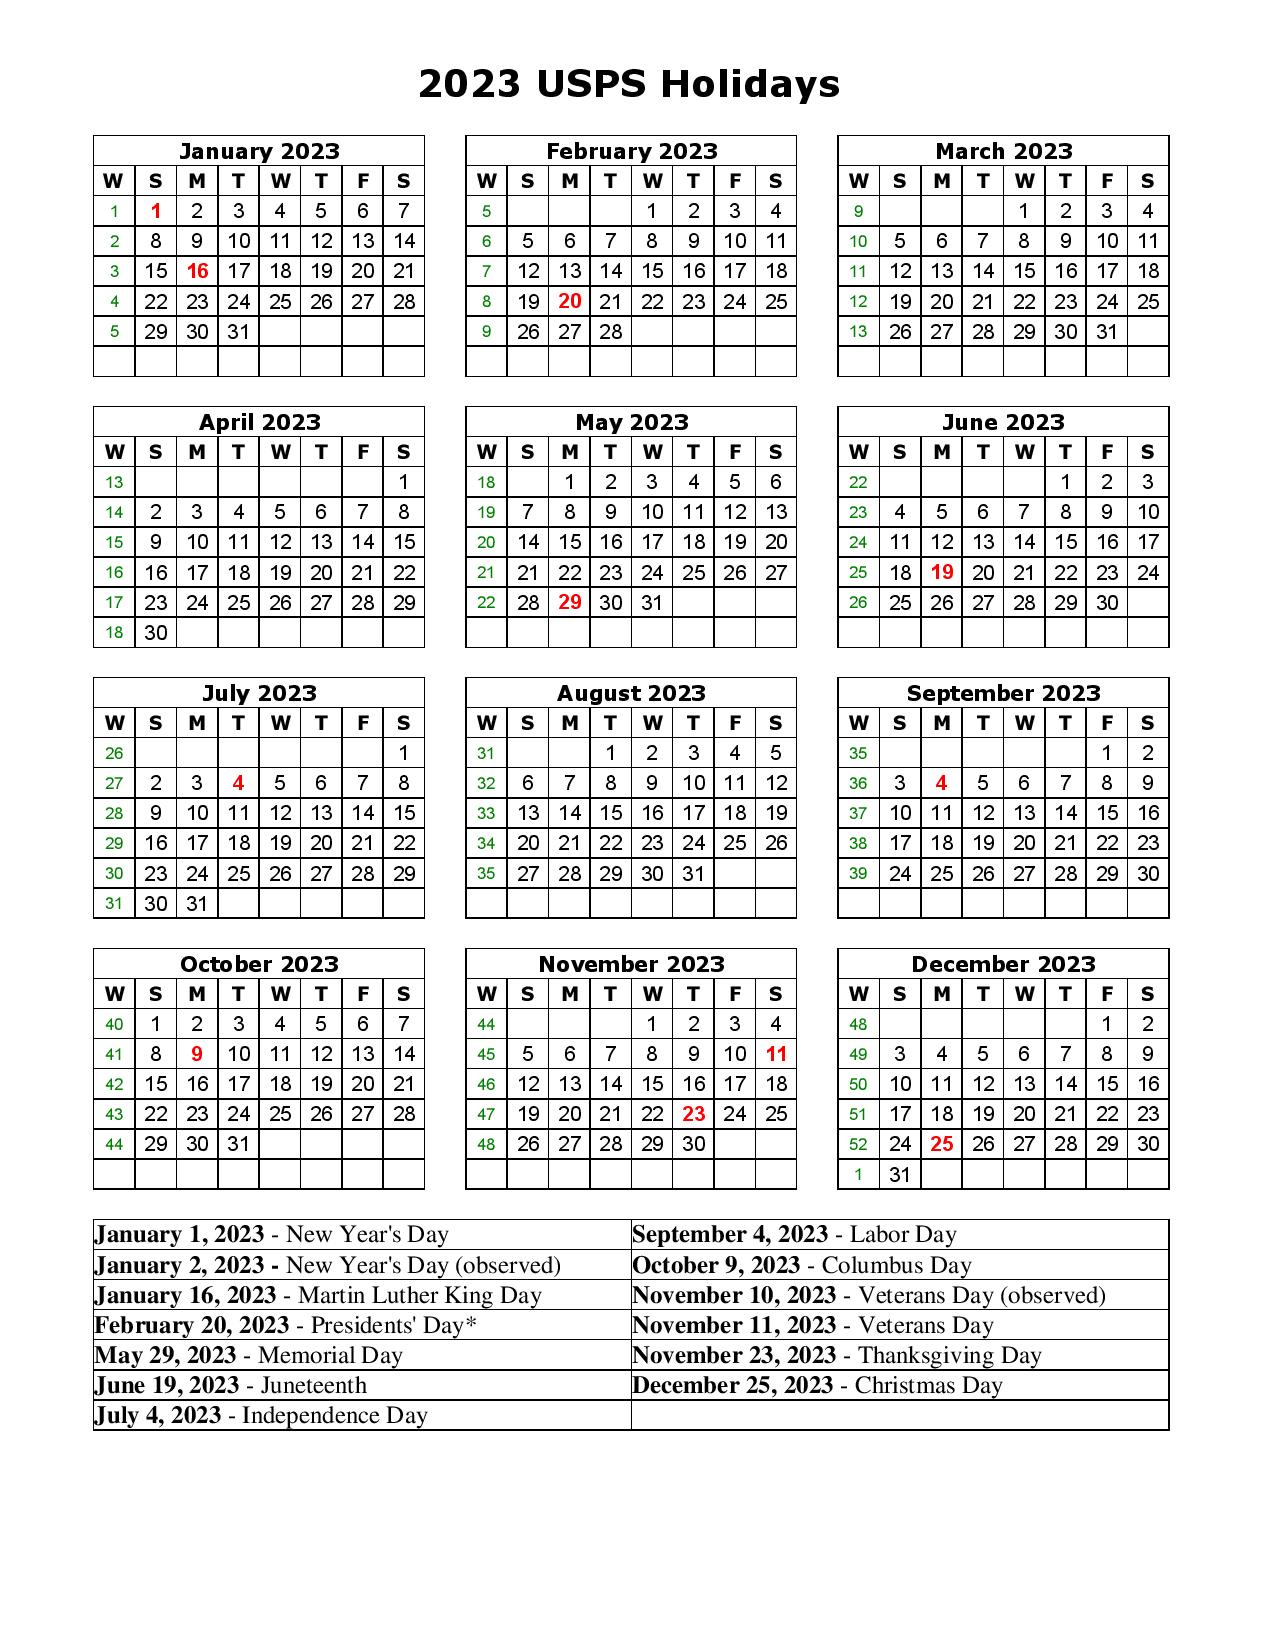 2023 USPS Holiday Calendar | U.S. Post Office Holidays - Printable ...